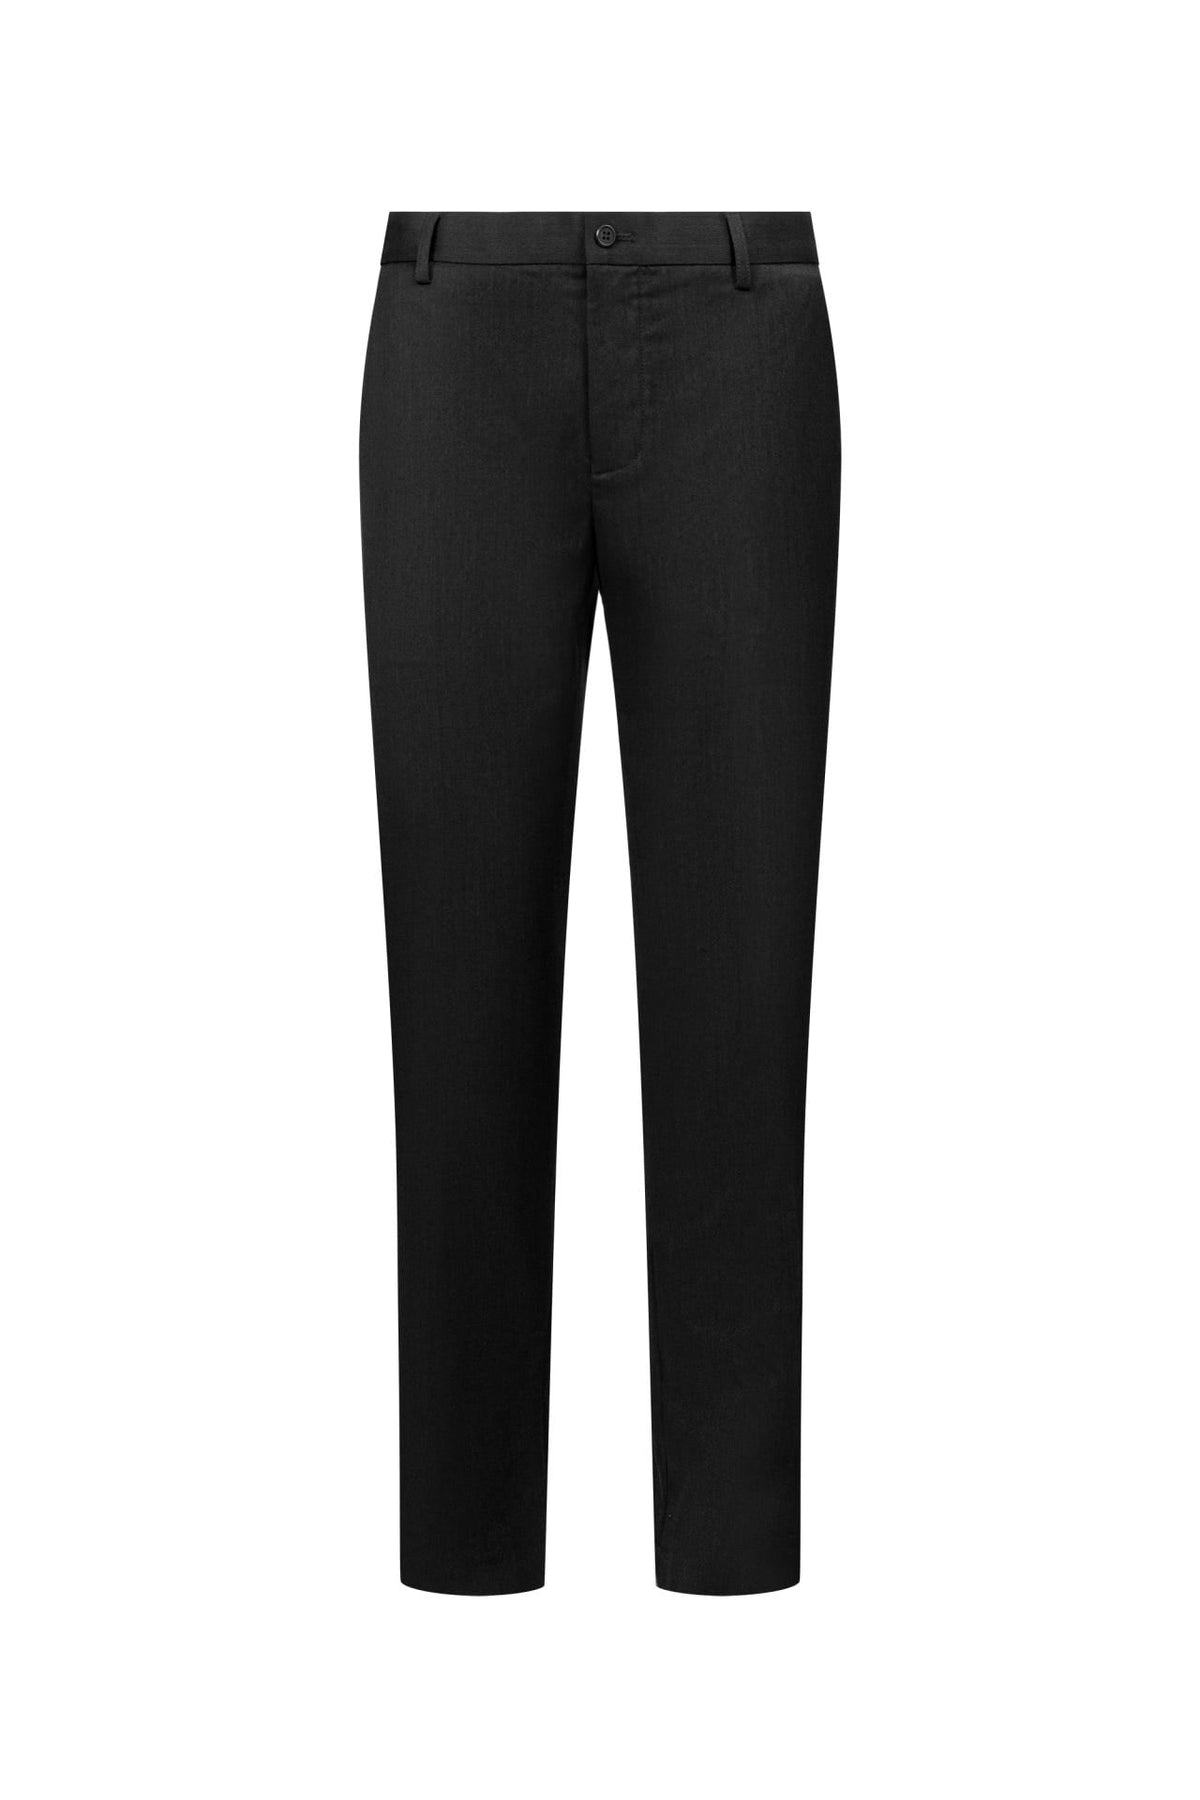 Black Wool Side Tab Dress Pant  Custom Fit Tailored Clothing